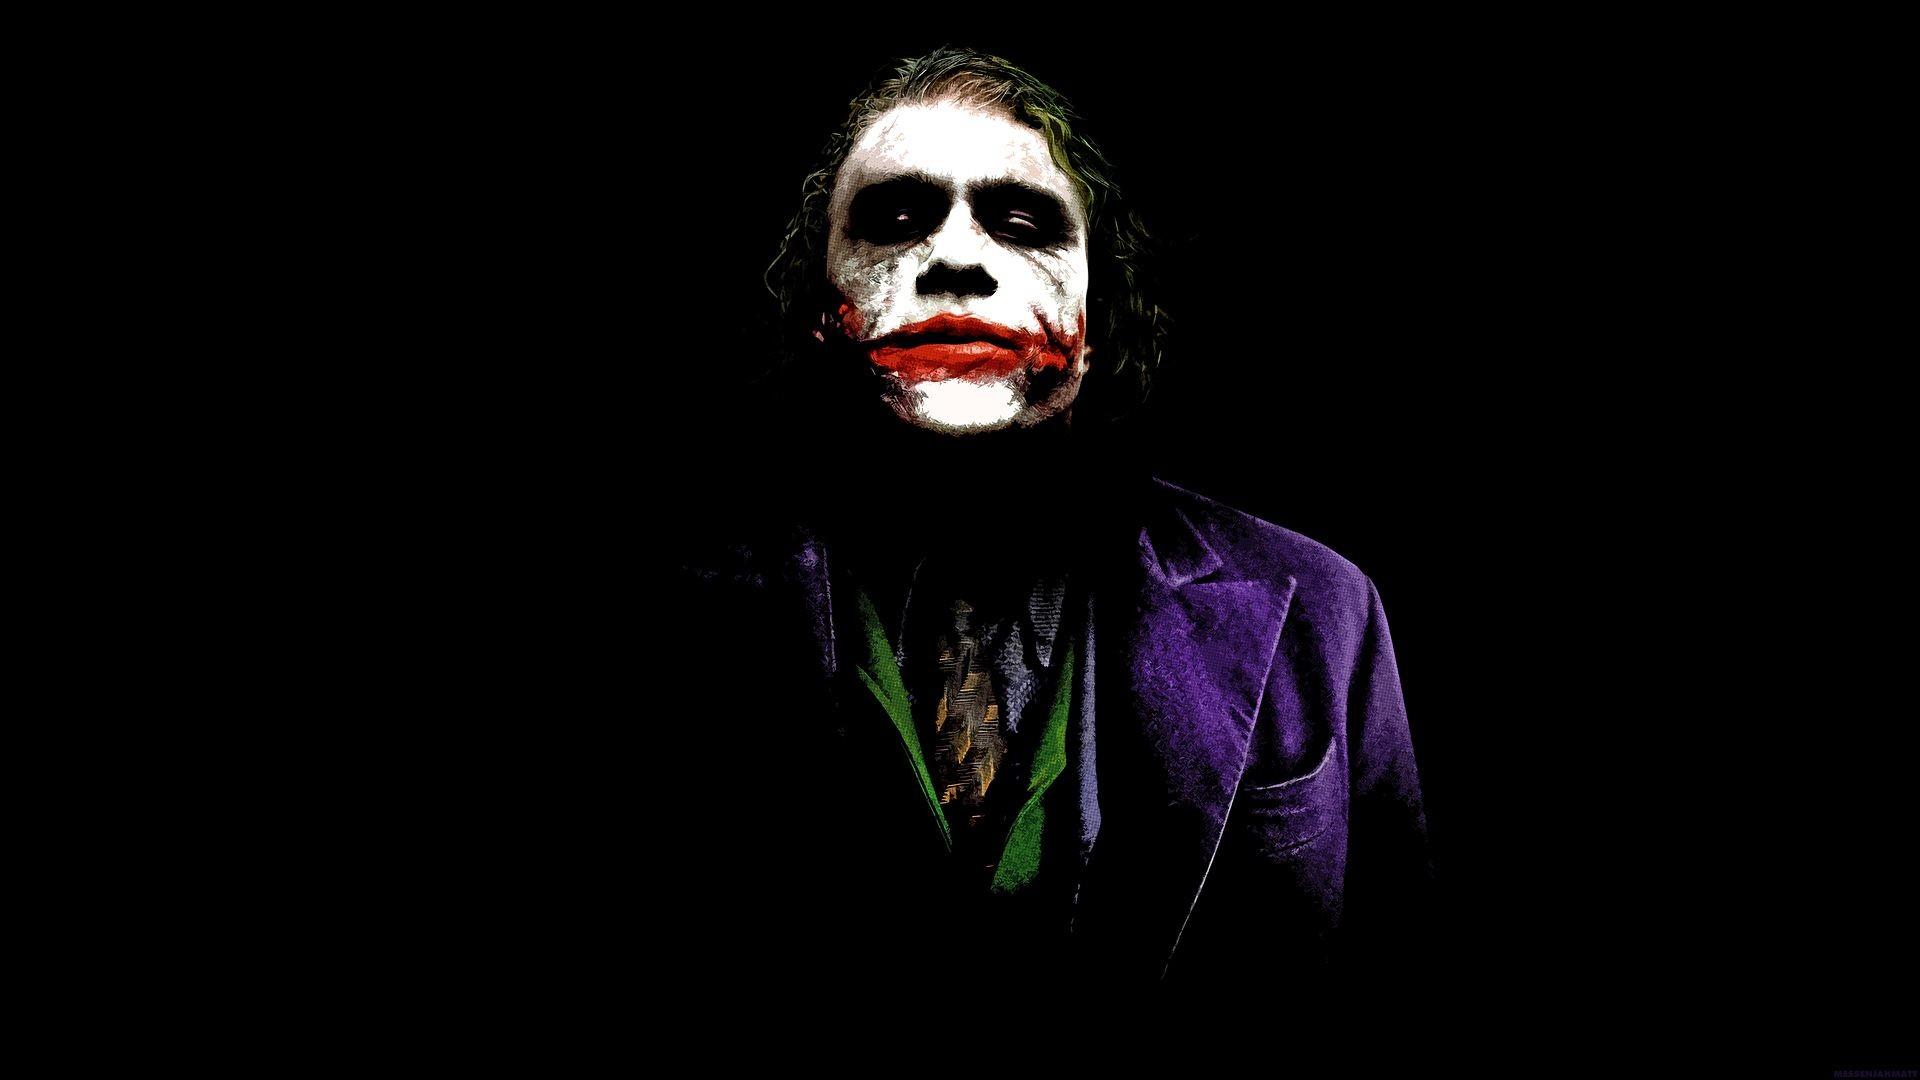 Joker HD Wallpaper background picture